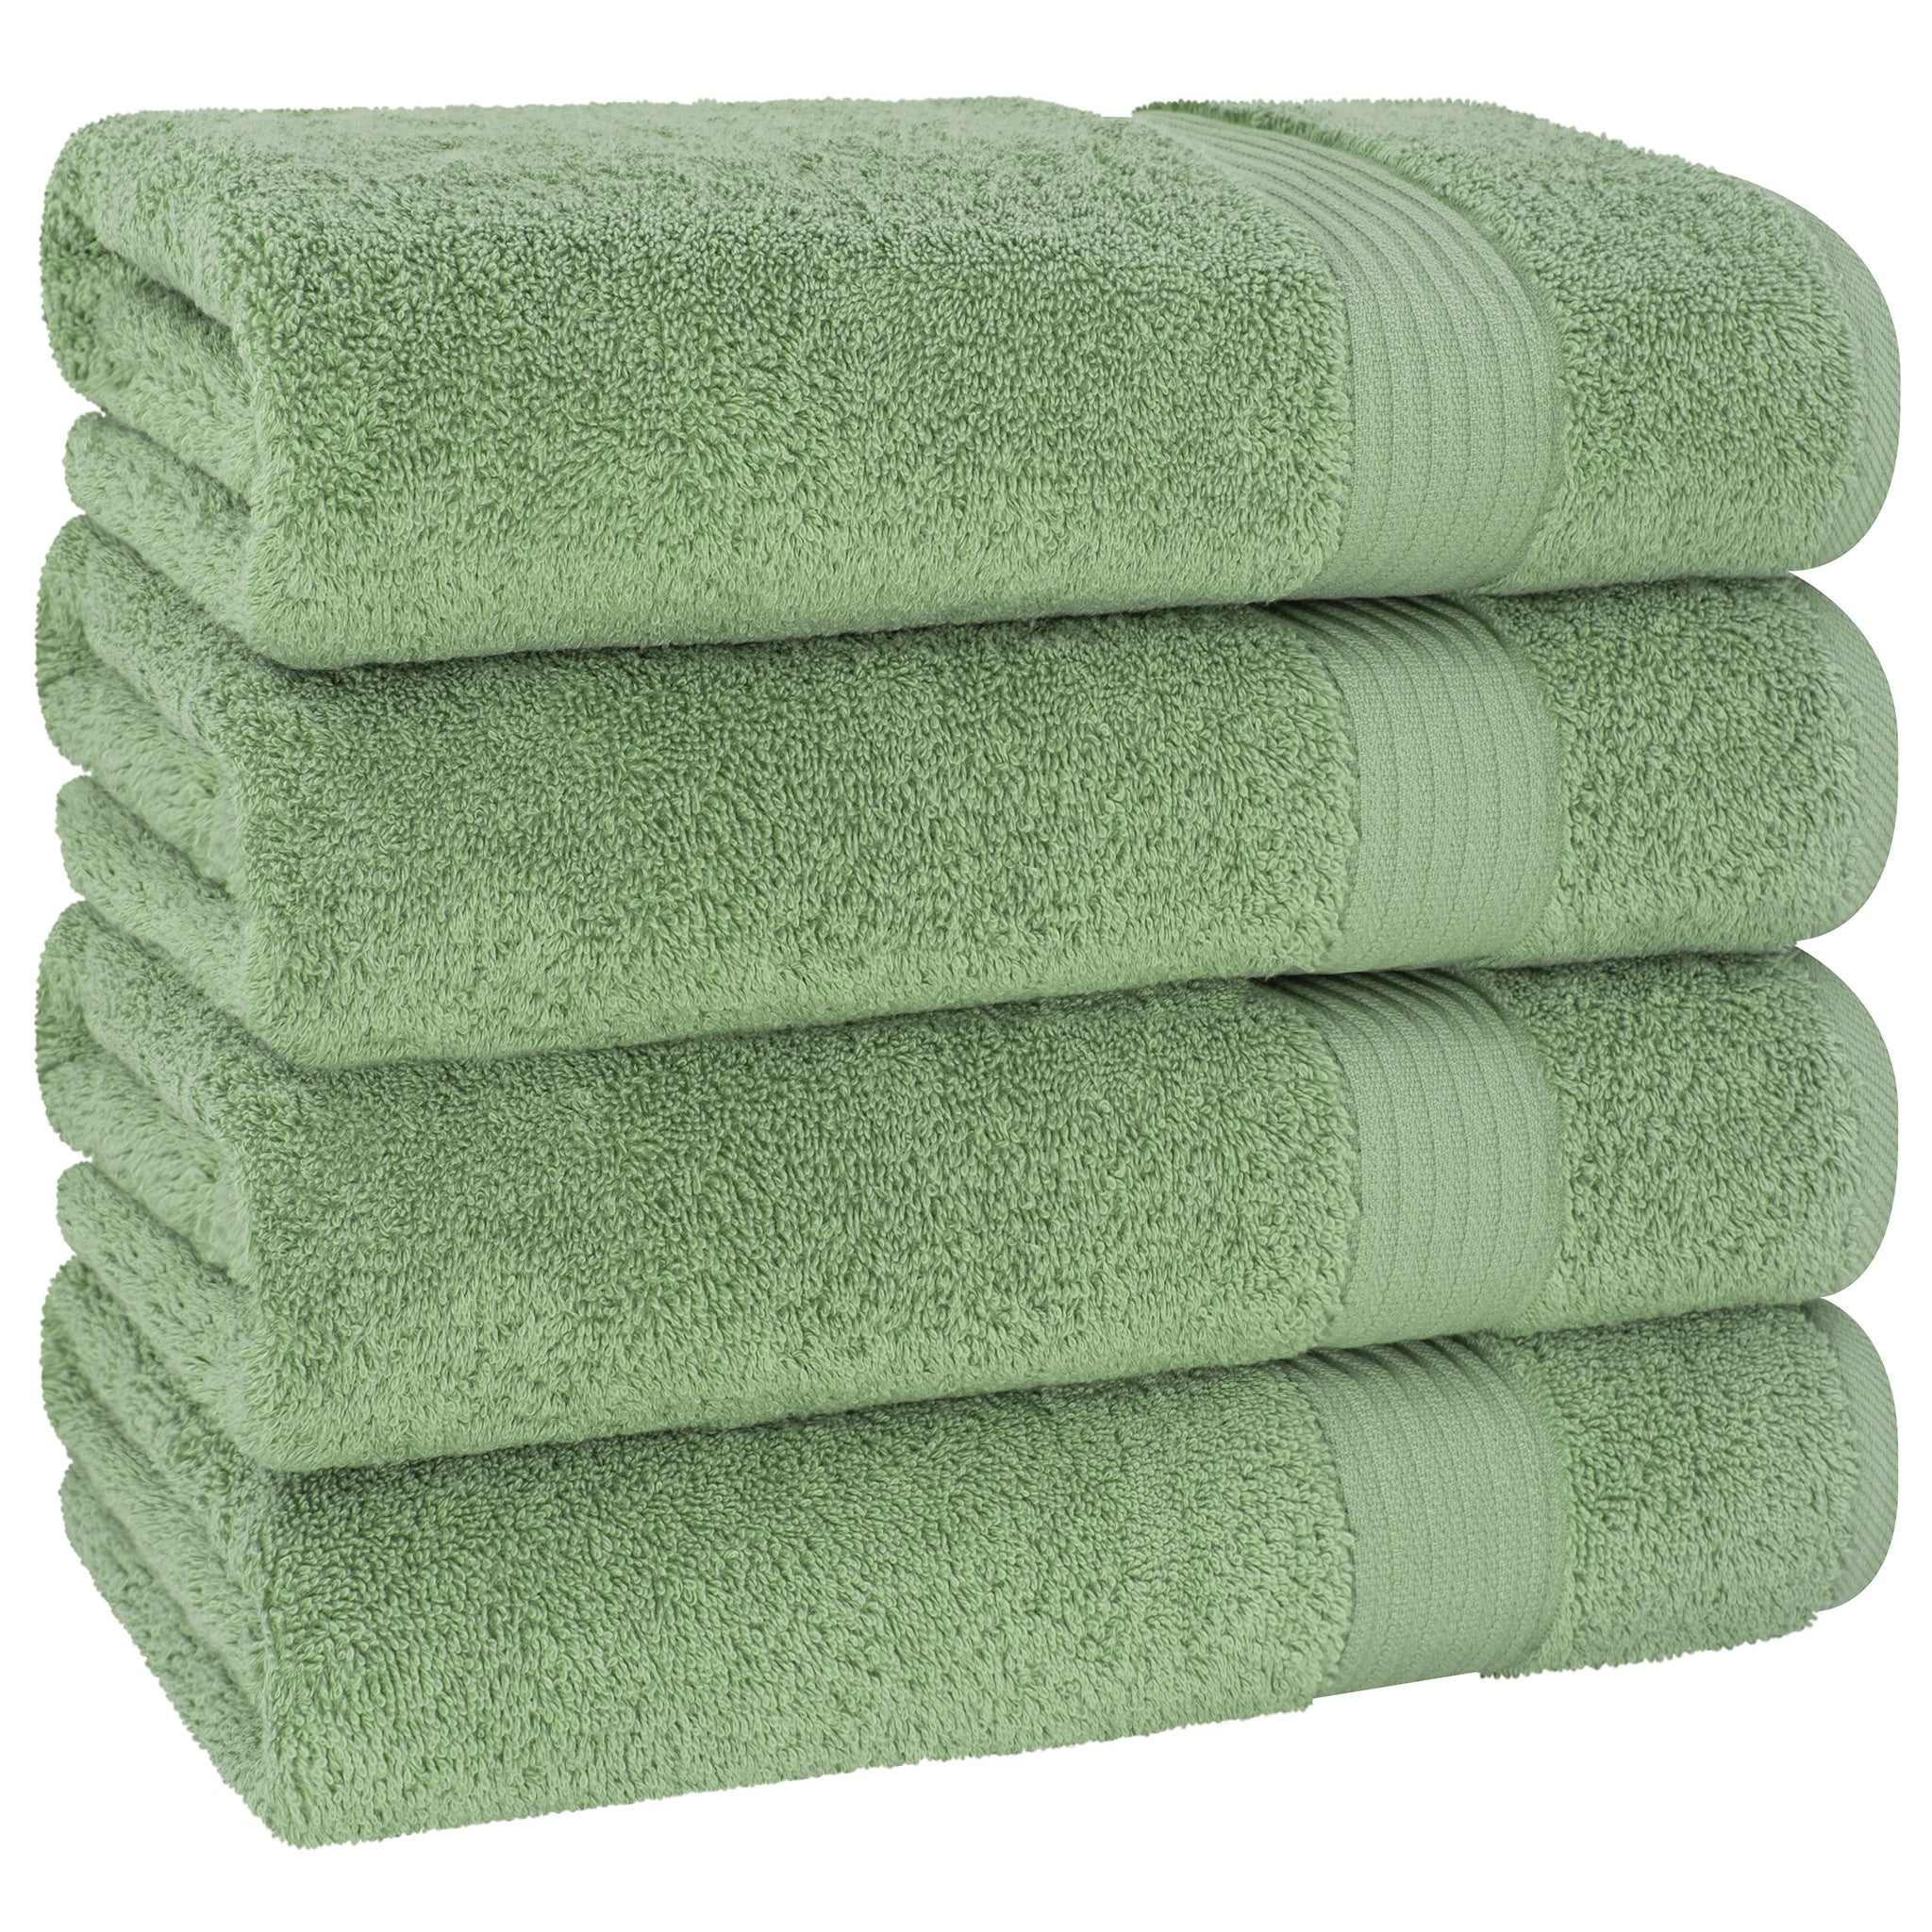 American Soft Linen Bekos 100% Cotton Turkish Towels, 4 Piece Bath Towel Set -sage-green-05